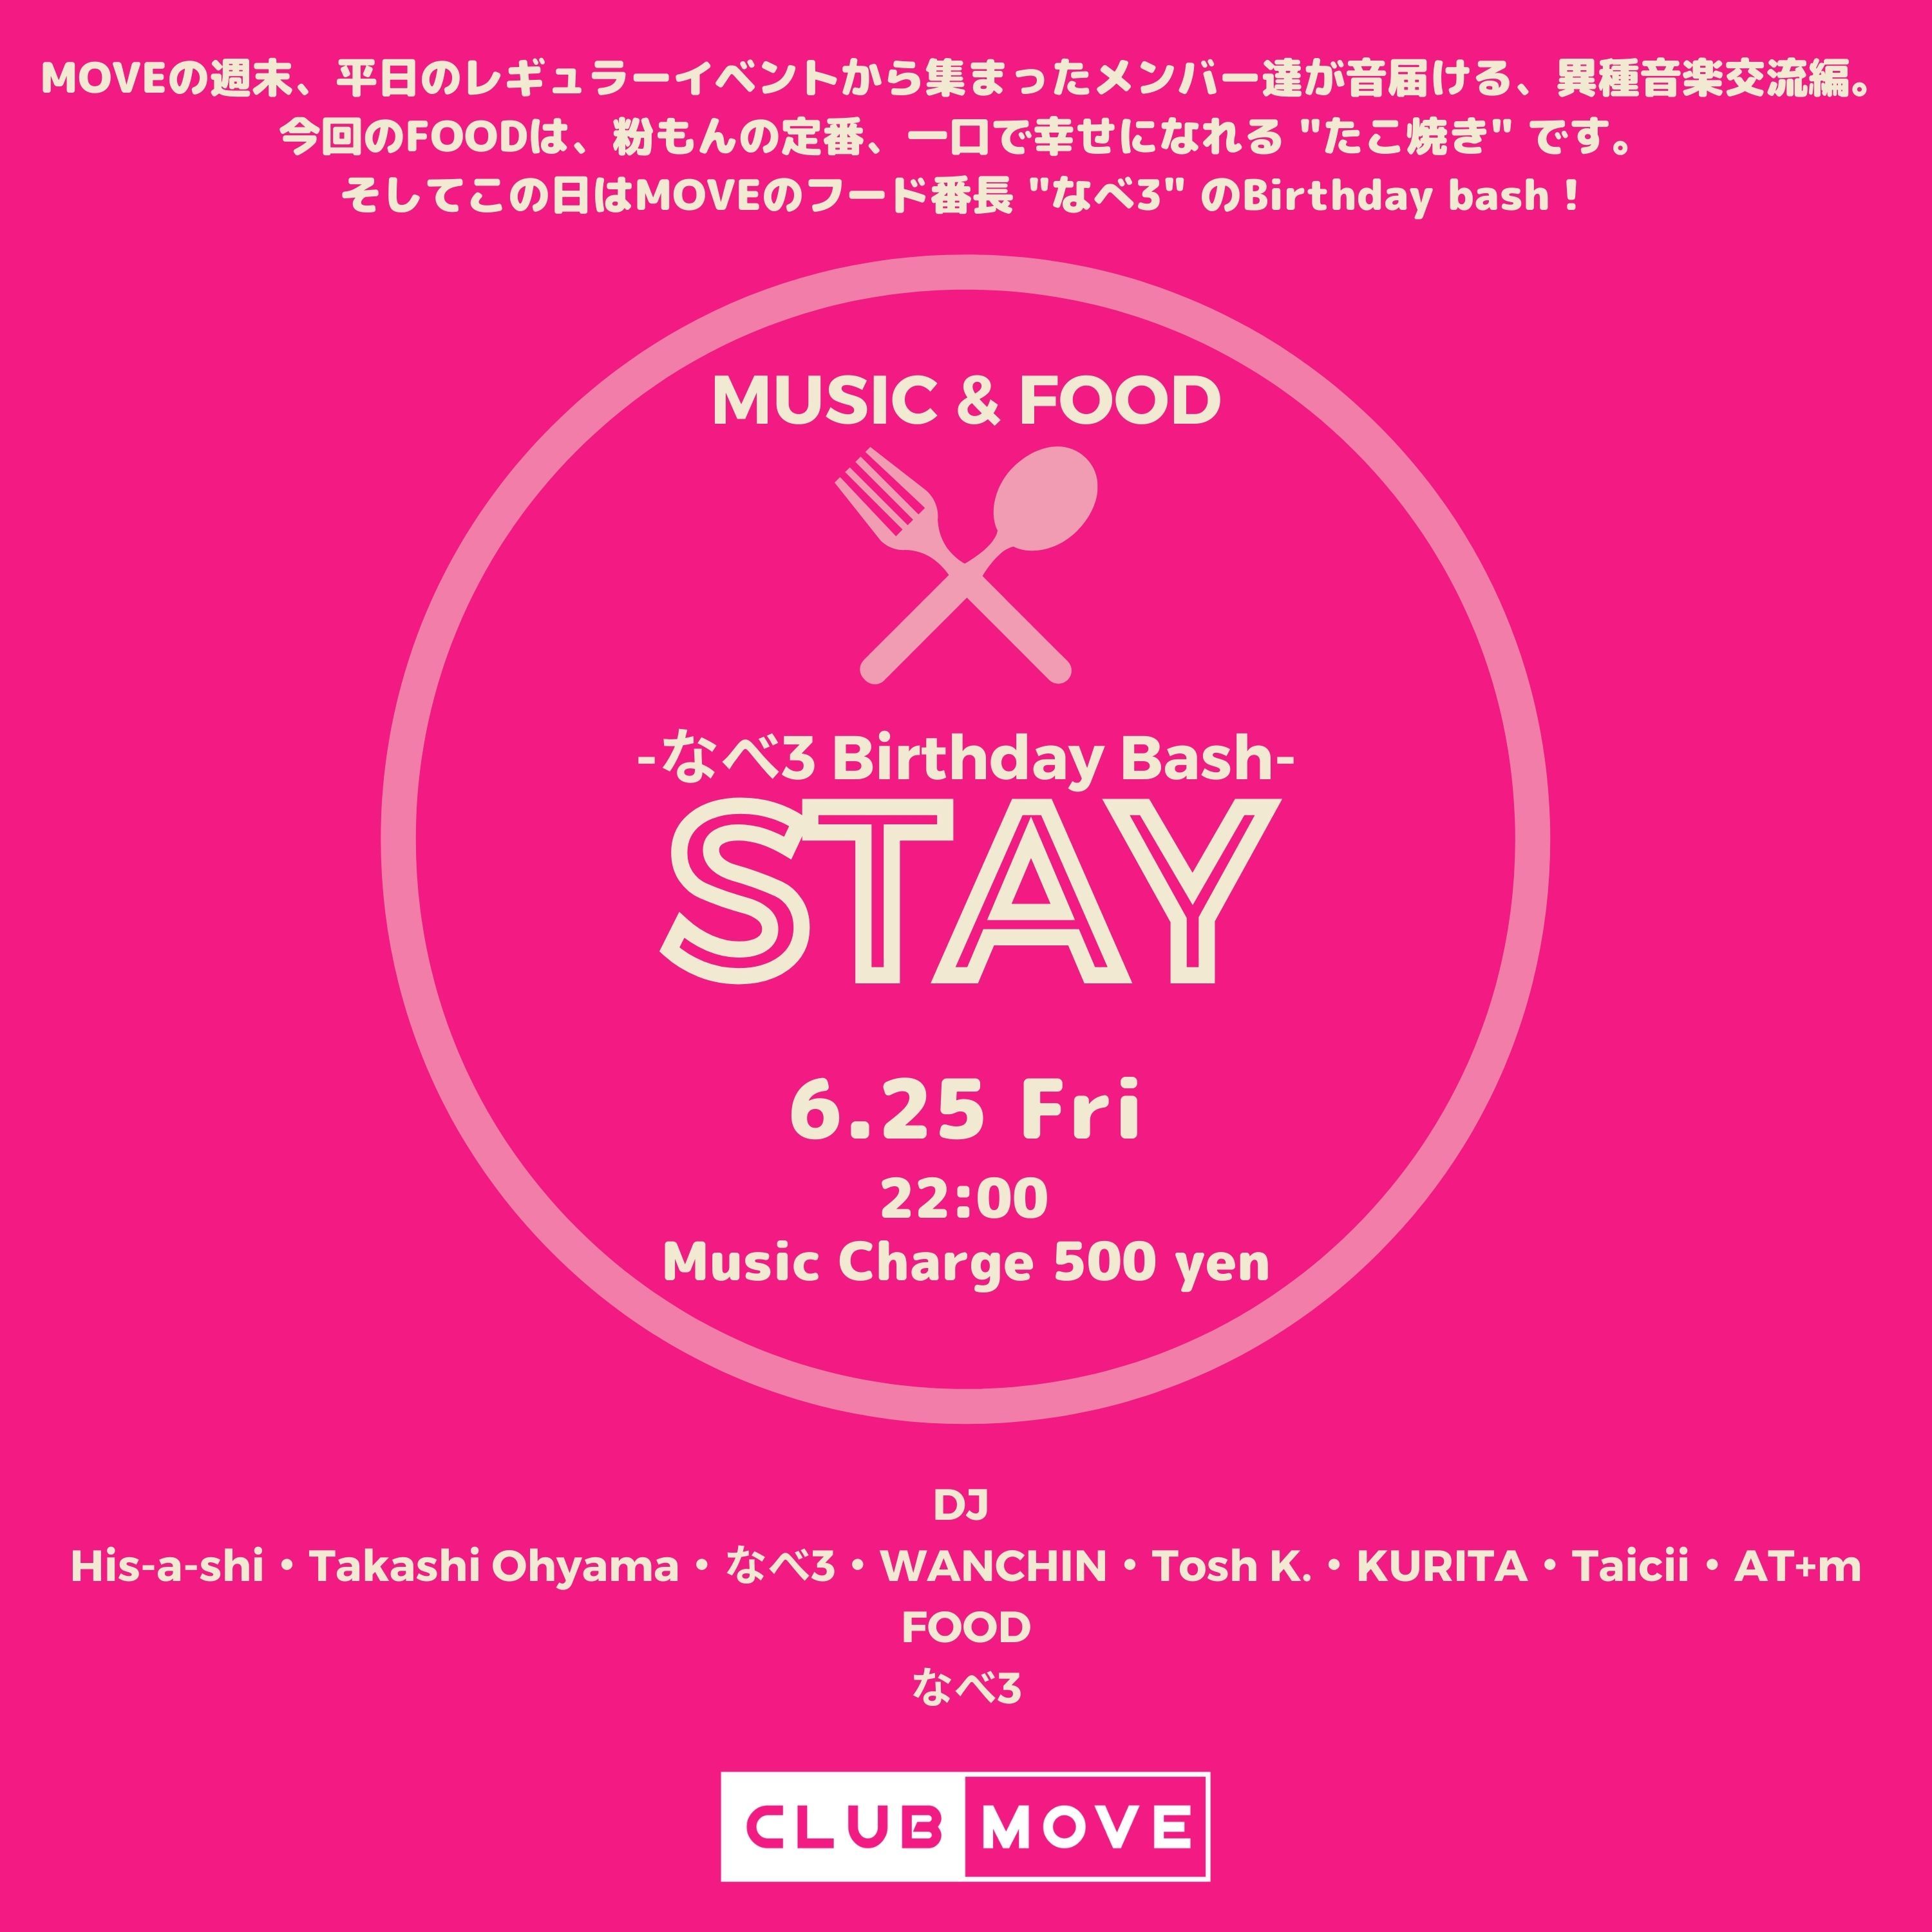 -MUSIC & FOOD- STAY -なべ3 Birthday bash-